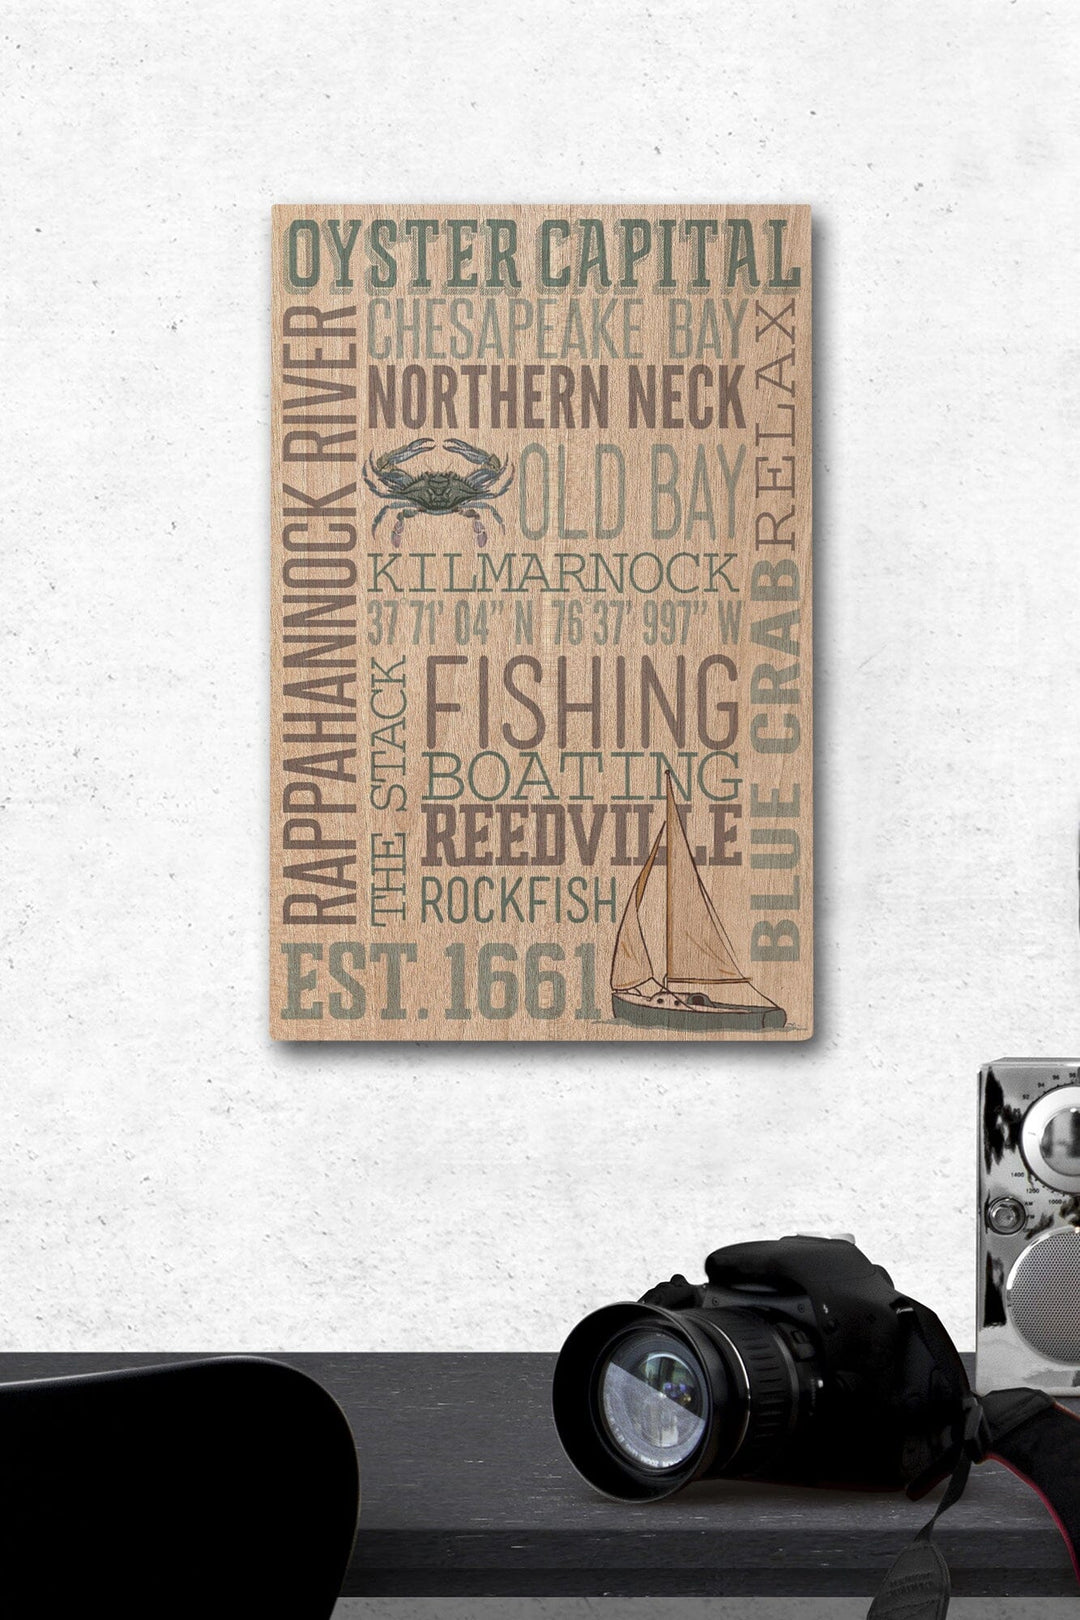 Northern Neck, Virginia, Chesapeake Bay, Oyster Capital, Typography, Lantern Press Artwork, Wood Signs and Postcards Wood Lantern Press 12 x 18 Wood Gallery Print 